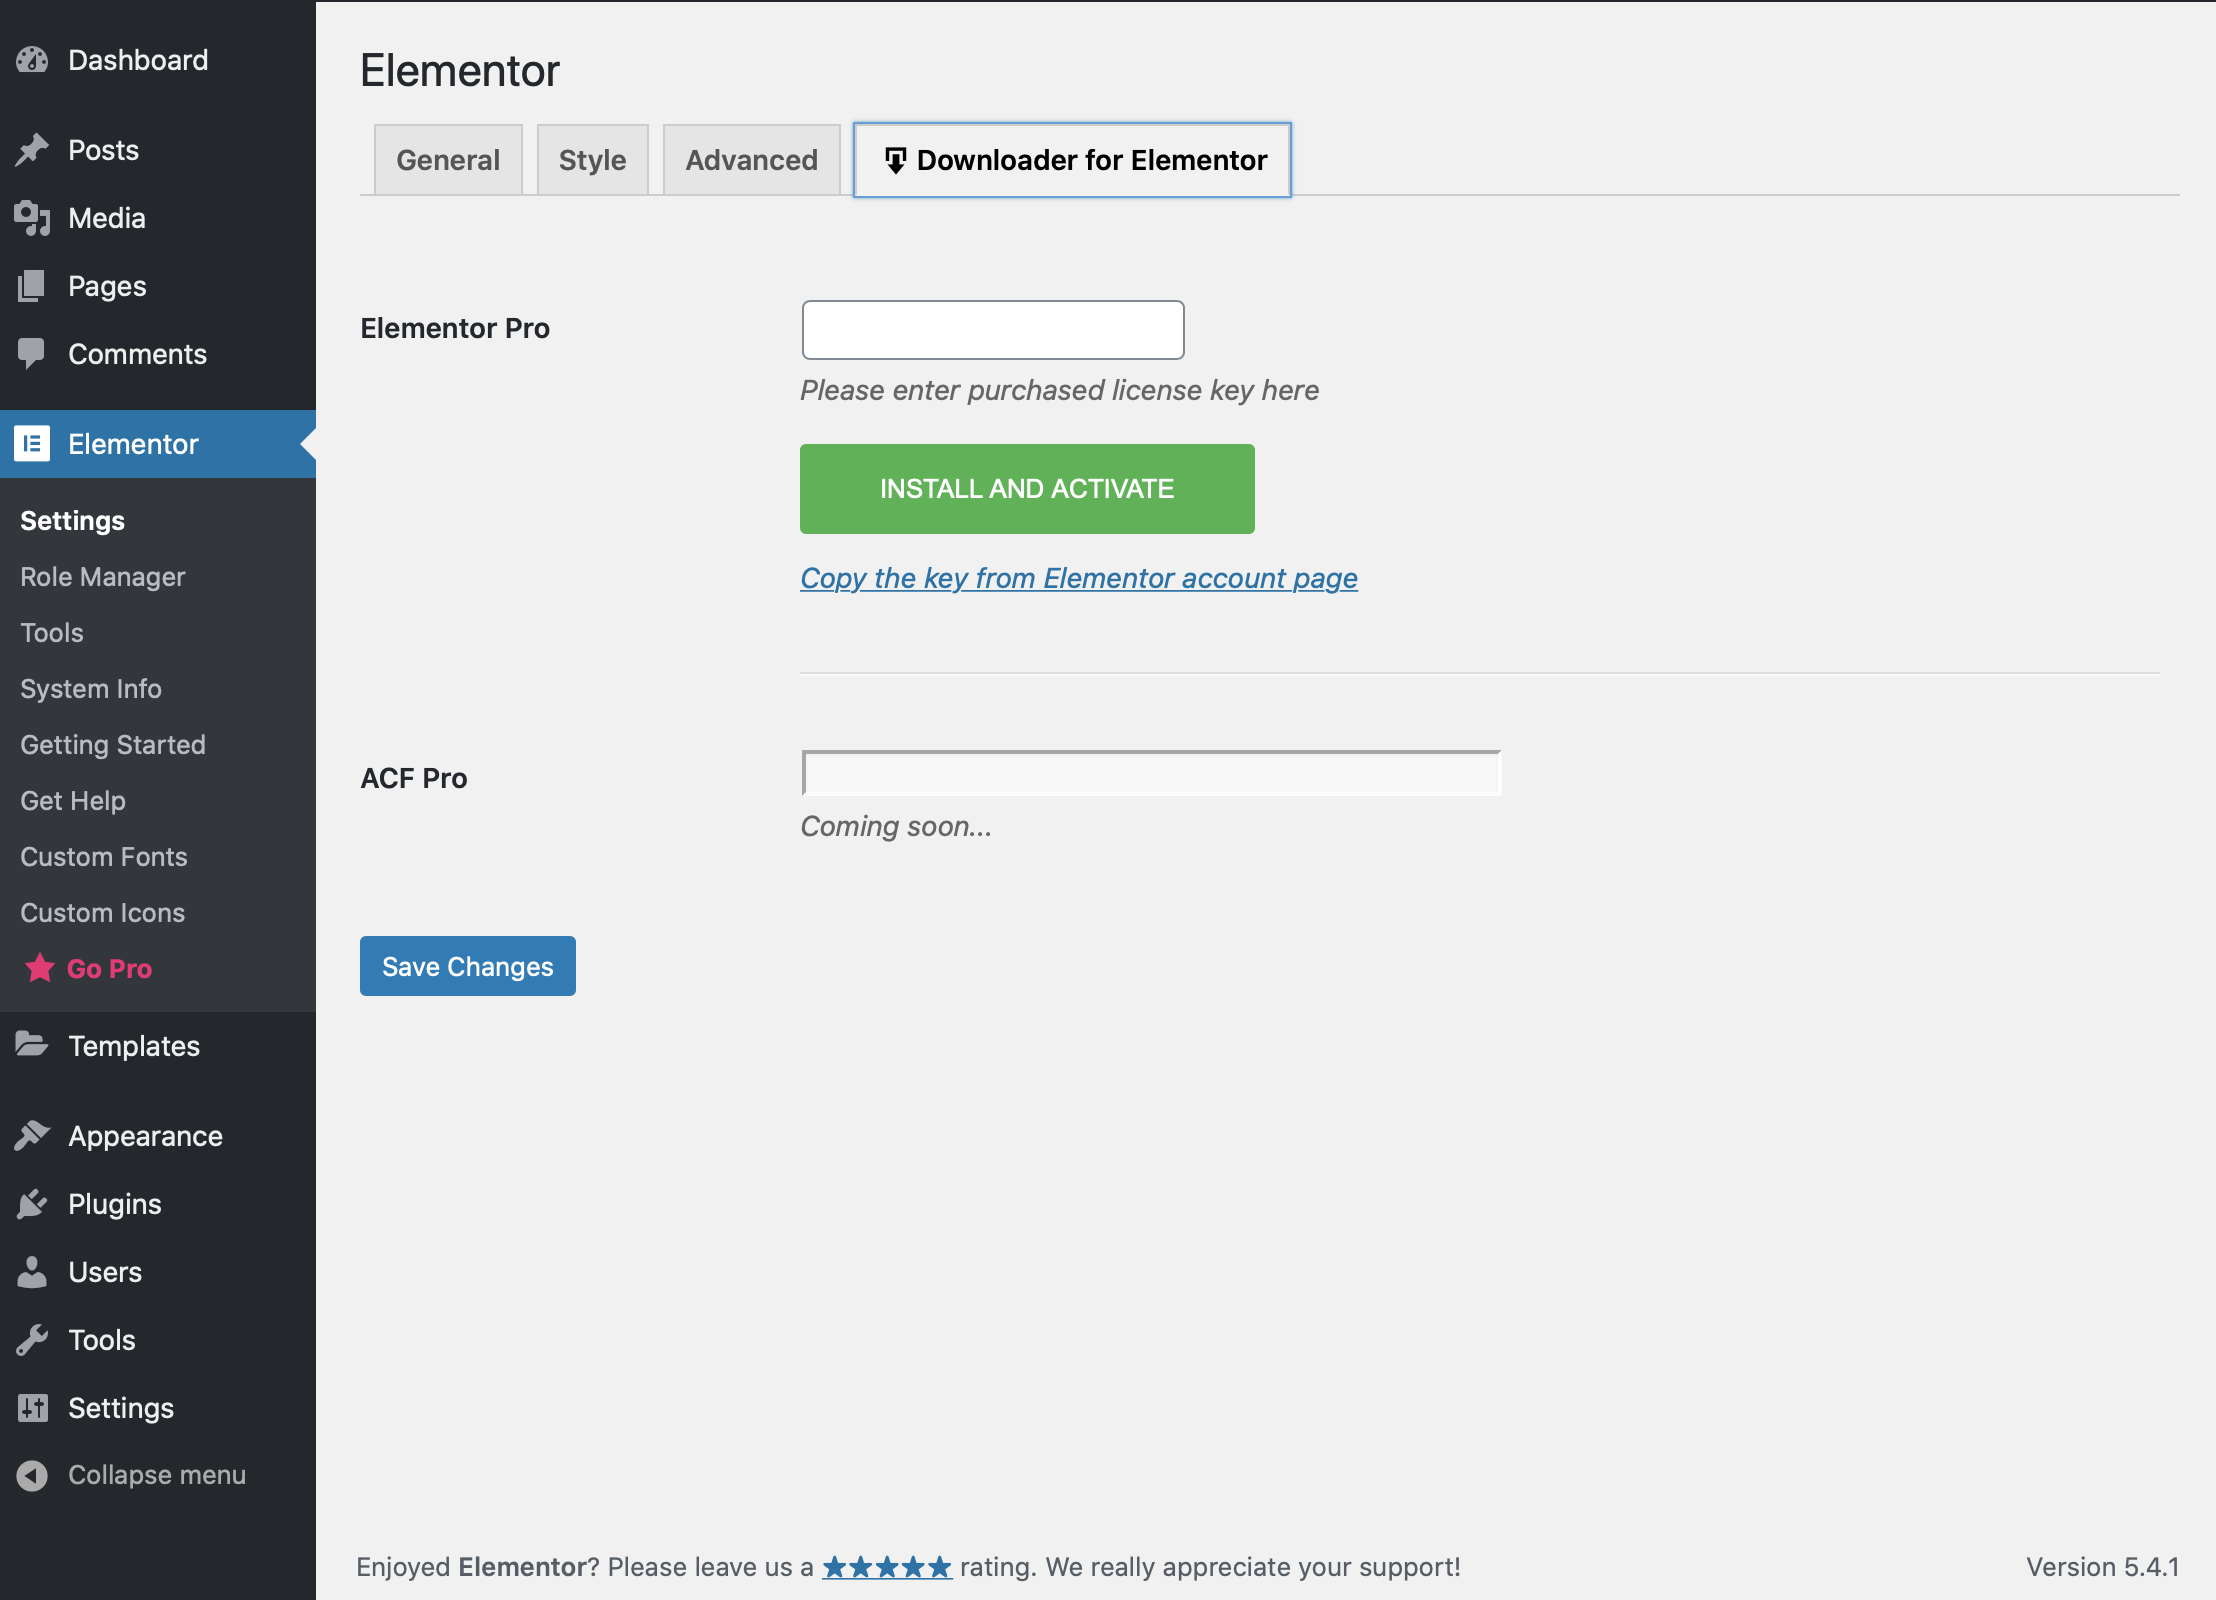 Downloader for Elementor Settings screen